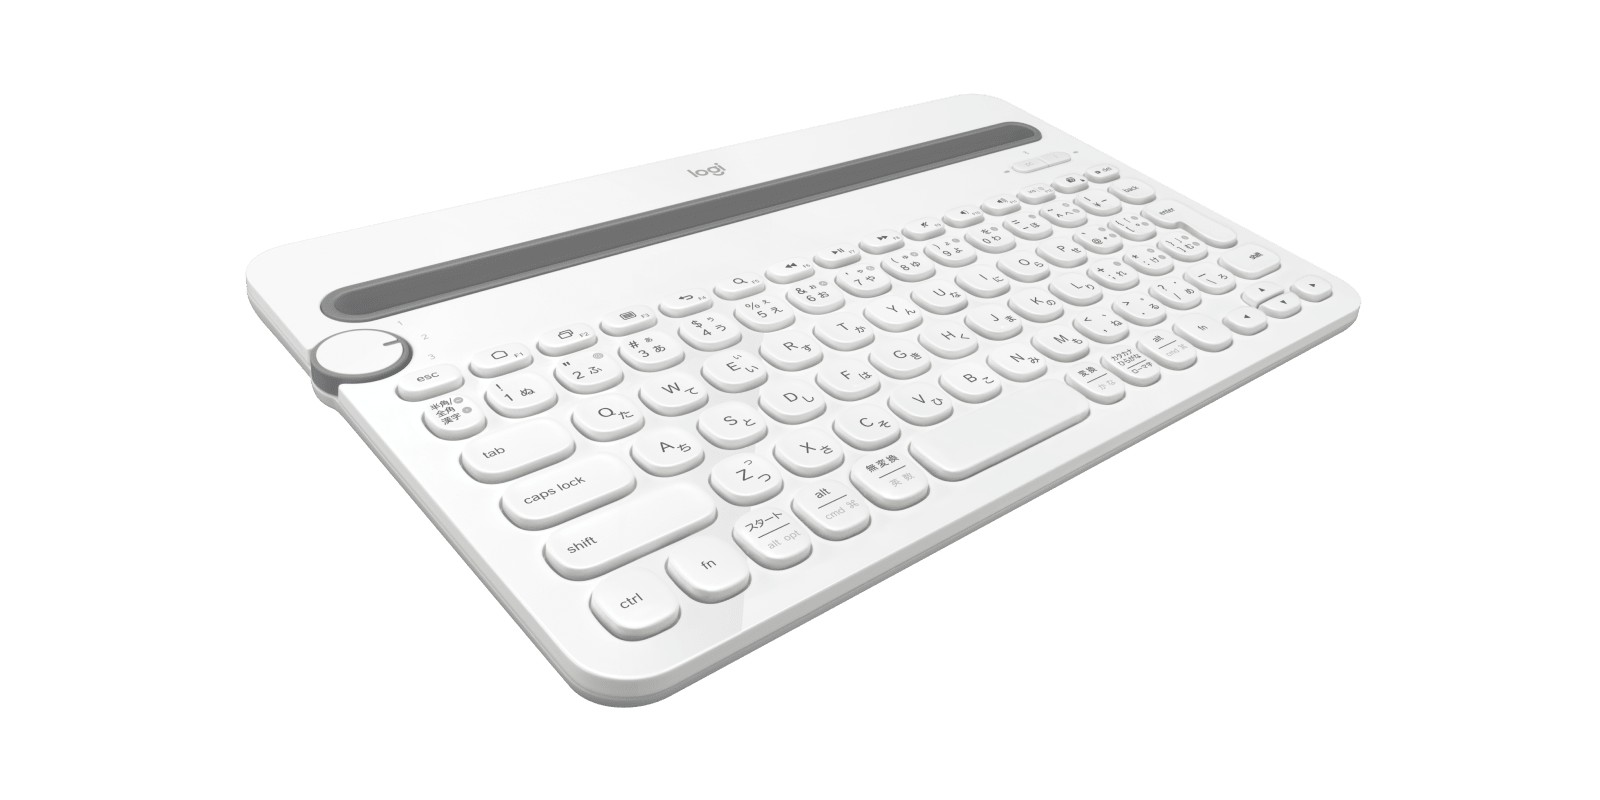 Logicool K480 BLUETOOTHマルチデバイス キーボード